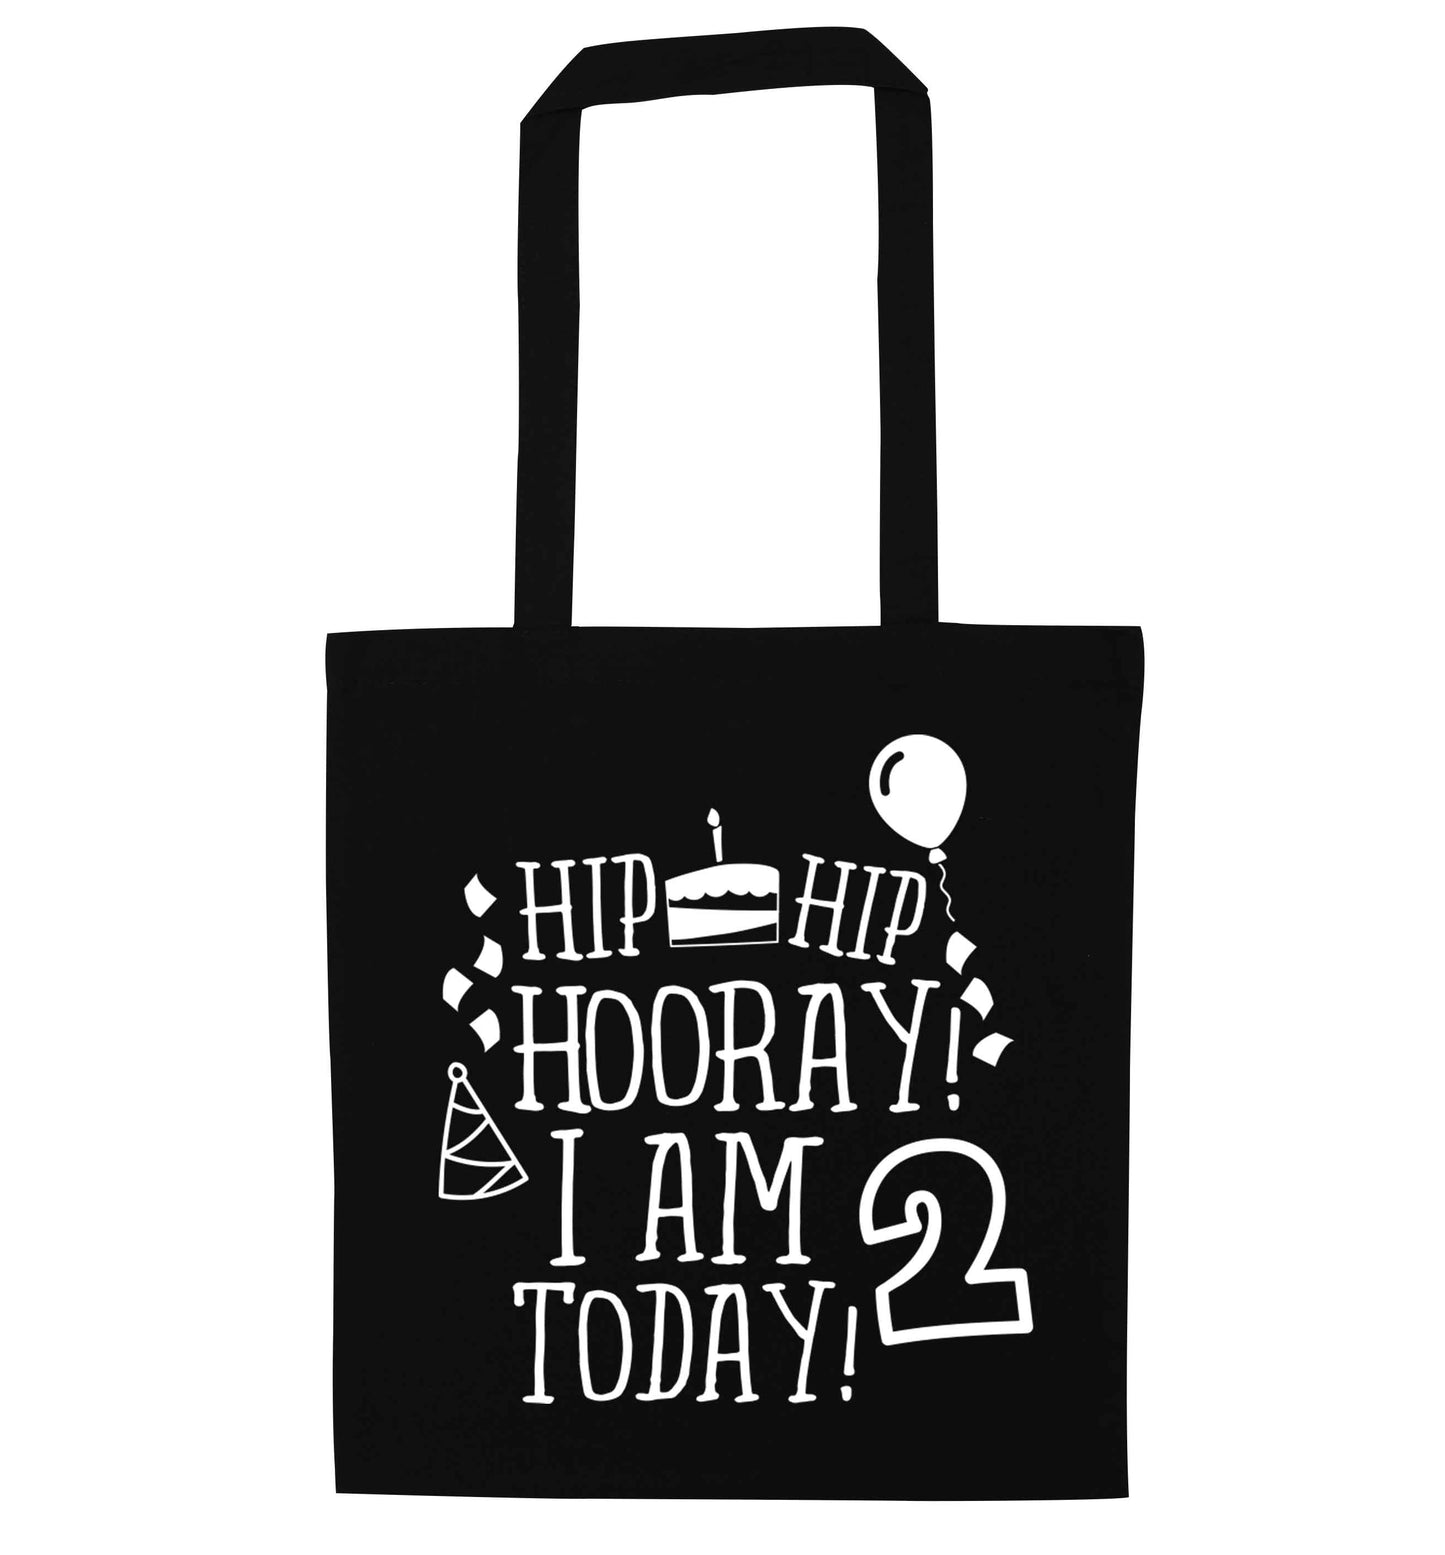 I'm 2 Today black tote bag